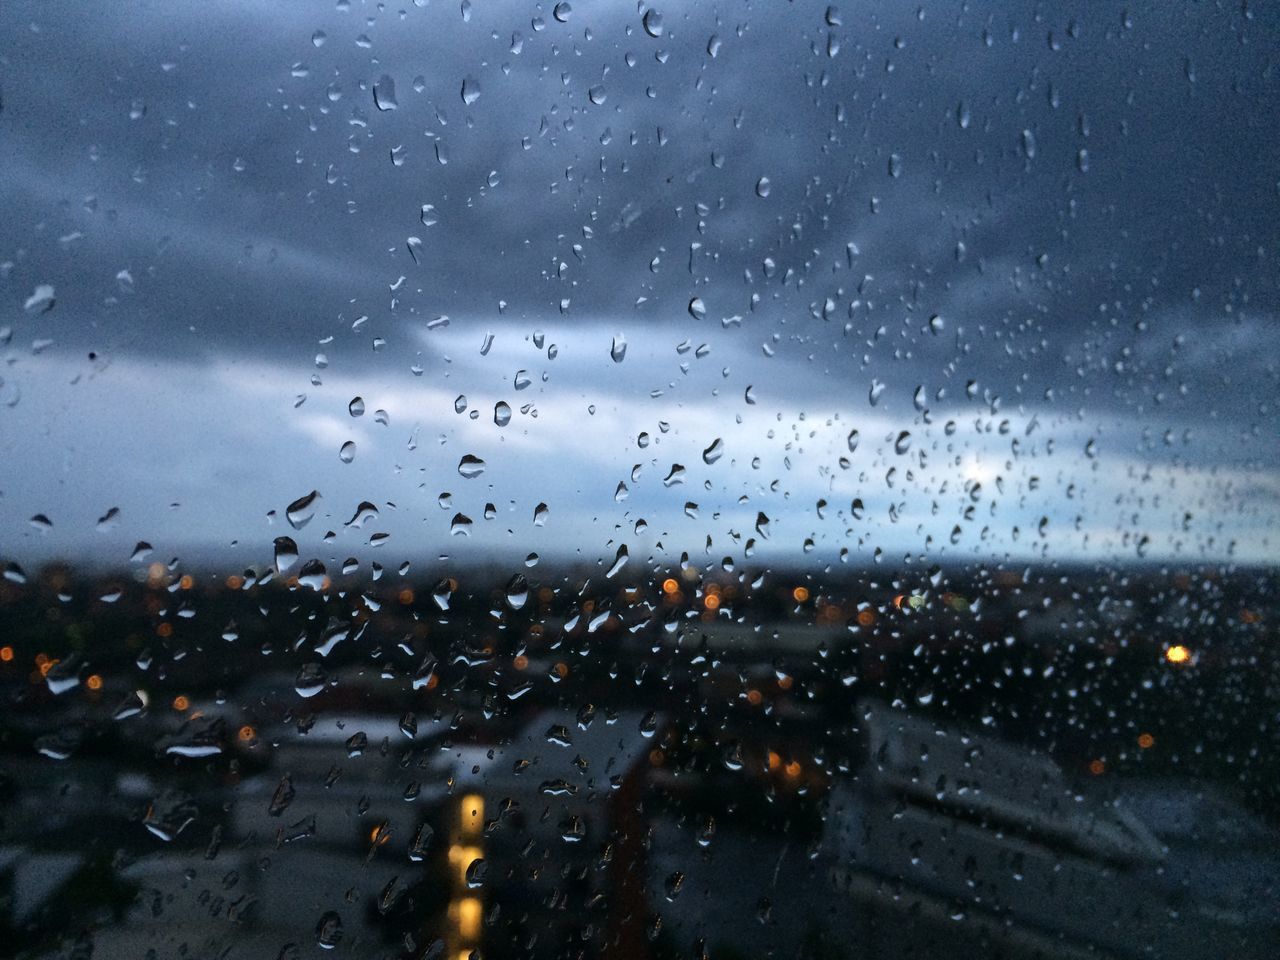 RAIN DROPS ON GLASS WINDOW